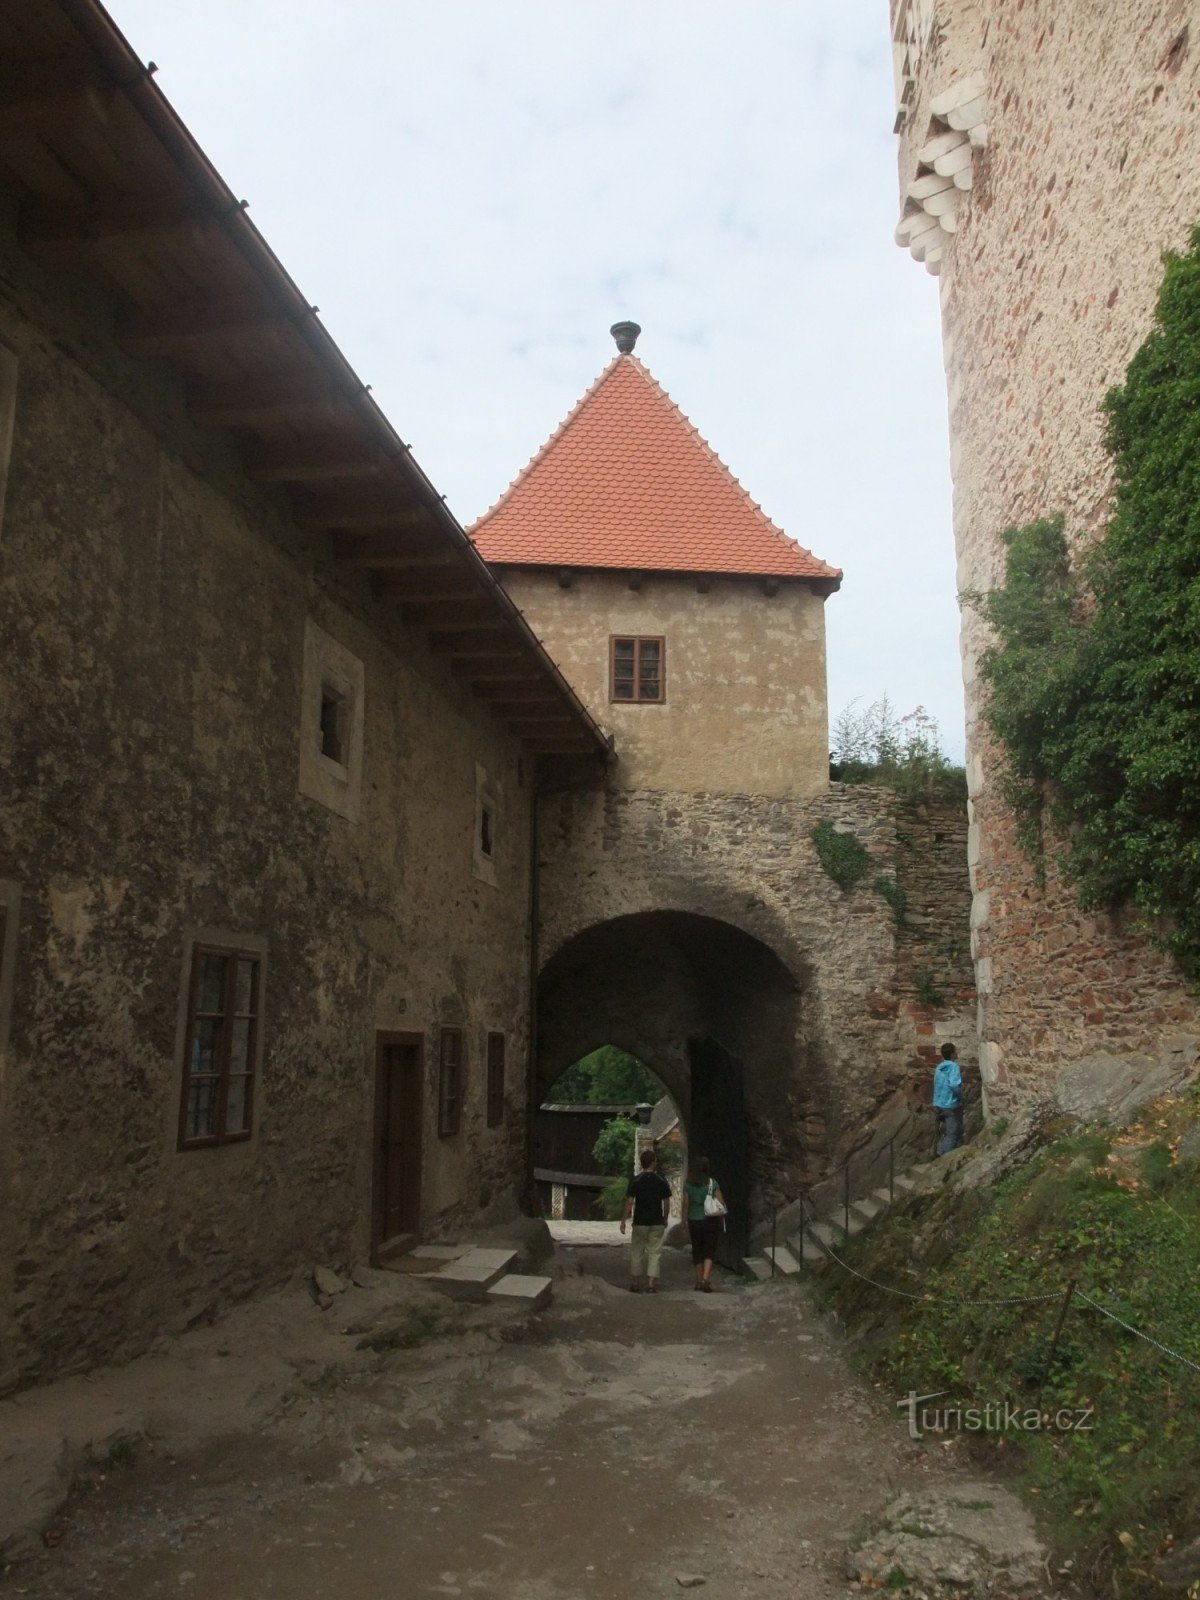 Ulazna cesta u dvorac